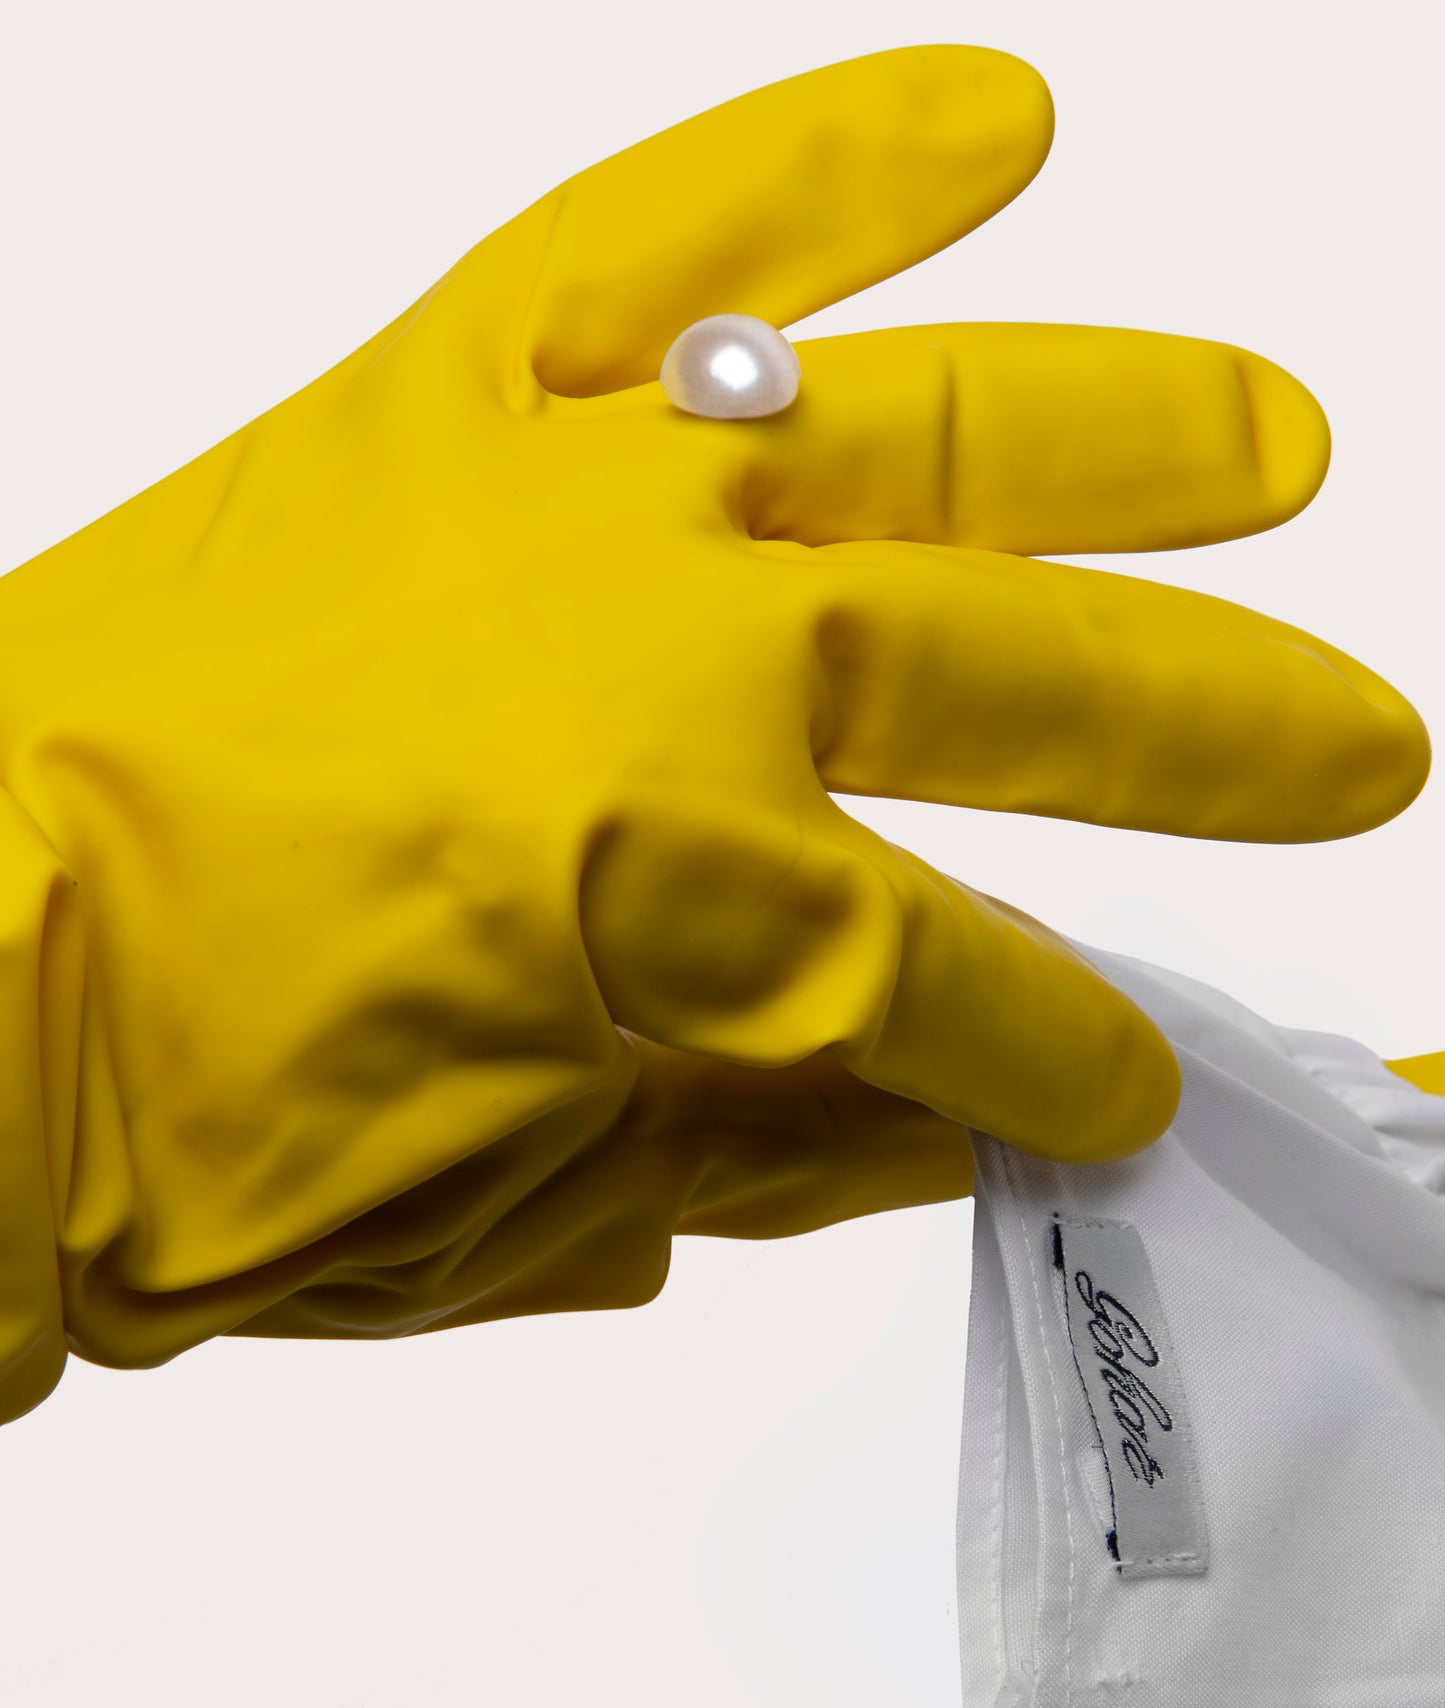 Host Gloves, Yellow